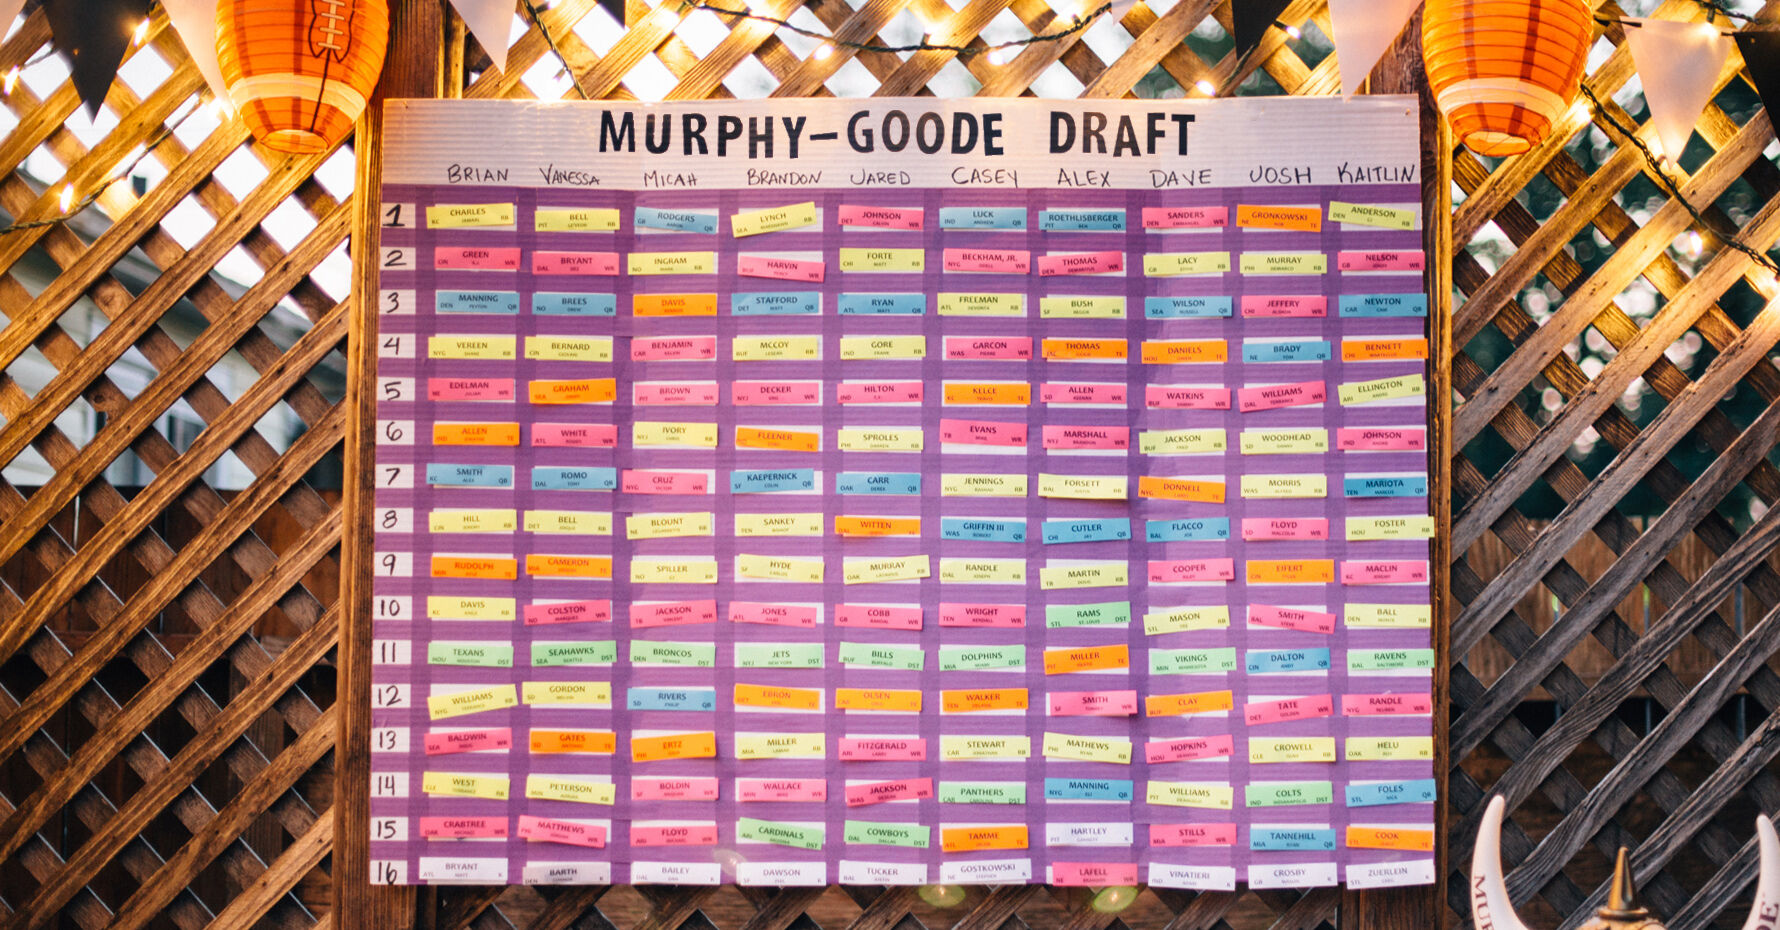 Murphy-Goode draft board